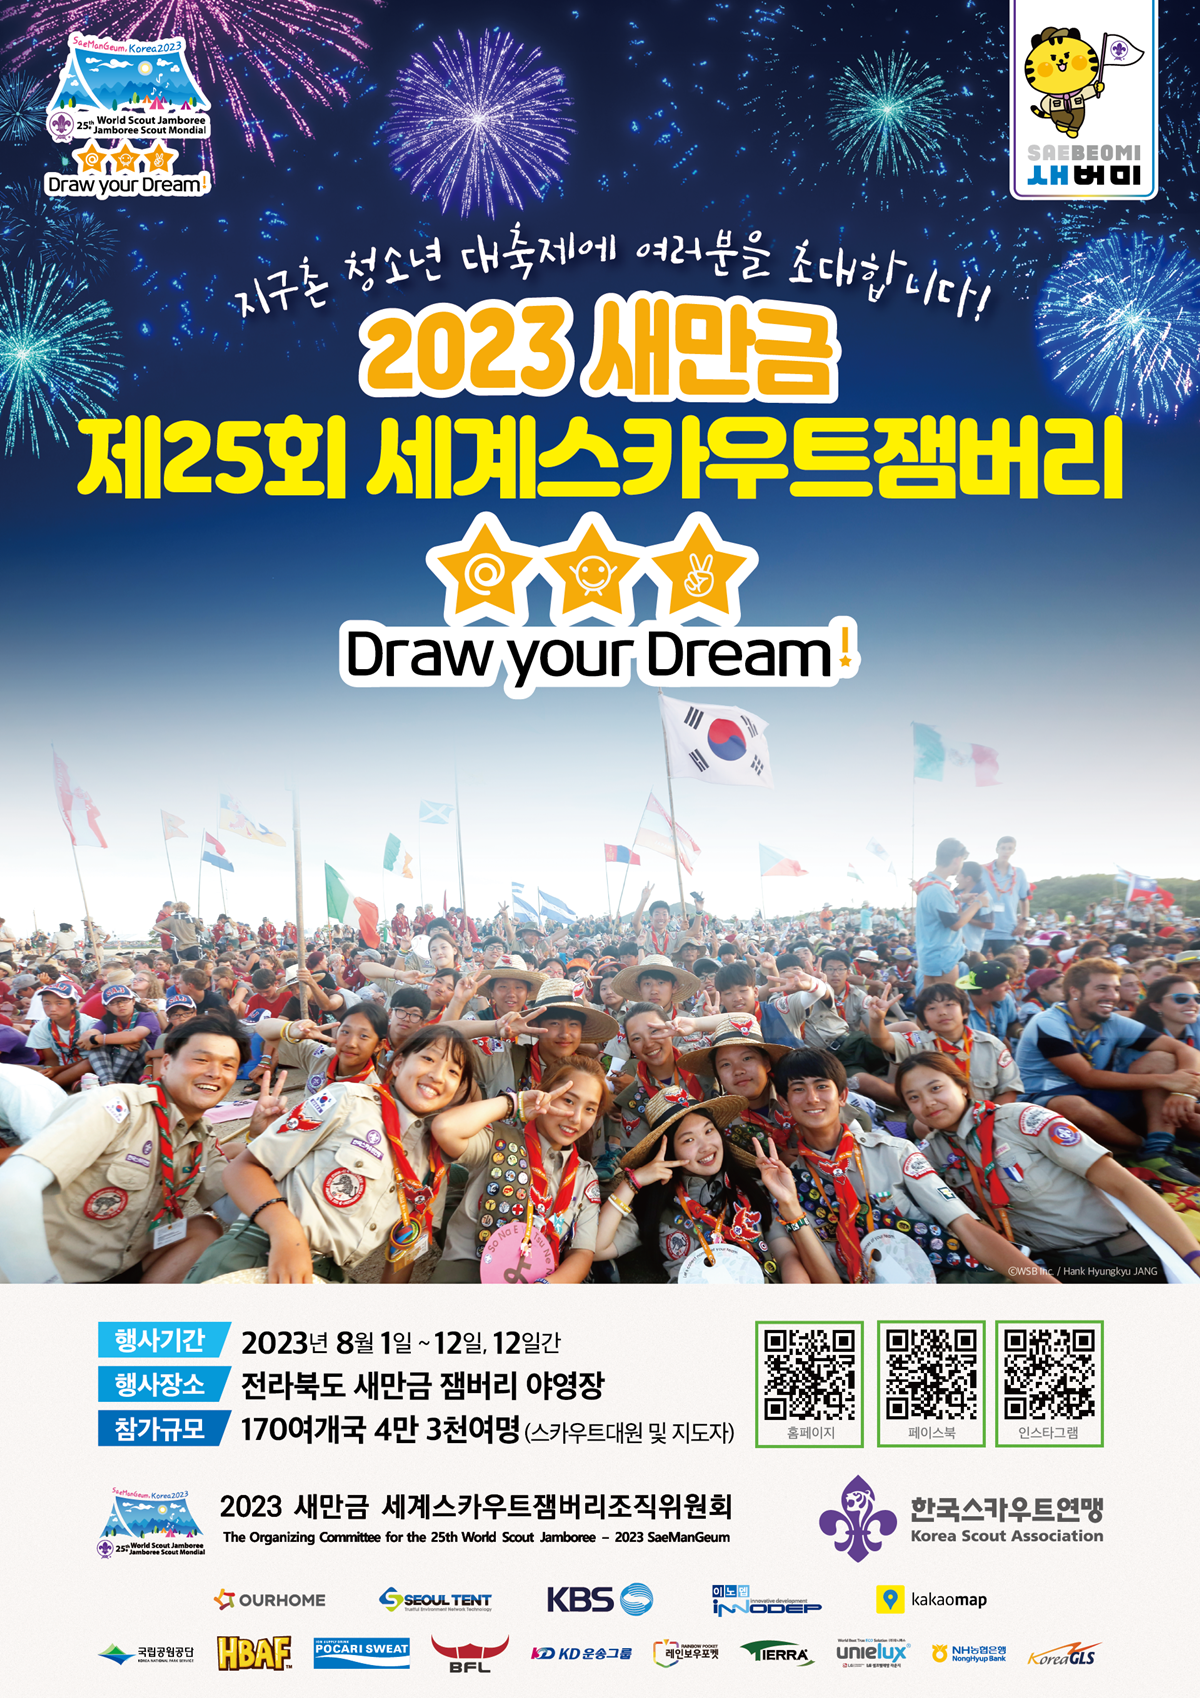 SaeManGeum, Korea2023 25th World Scout Jamboree Jamboree Scout Mondial Draw Your Dream! SAEBEOMI 새버미 지구촌 청소년 대축제에 여러분을 초대합니다! 2023 새만금 제25회 세계스카우트 잼버리 Draw your Dream! 행사기간 : 2023년 8월 1일 ~ 12일, 12일간 행사장소 전라북도 새만금 잼버리 야영장 참가규모 170여개국 4만 3천여명 (스카우트대원 및 지도자) 홈페이지 QR코드 (http://m.site.naver.com/15NFW) / 페이스북 QR코드 (http://m.site.naver.com/15NHe) / 인스타그램 QR코드 (http://m.site.naver.com/15NGD) 2023 새만금 세계스카우트잼버리조직위원회 The Organizing Committee for the 25th World Scout Jamboree - 2023 SaeManGeum / 한국스카우트연맹 Korea Scout Association / OURHOME / SEOUL TENT / KBS / 이노뎁iNNODEP / kakaomap / 국립공원공단 / HBAF / POCARI SWEAT / BFL / KD 운송그룹 / TIERAA / unielux / NH농협은행 / KoreaGLS